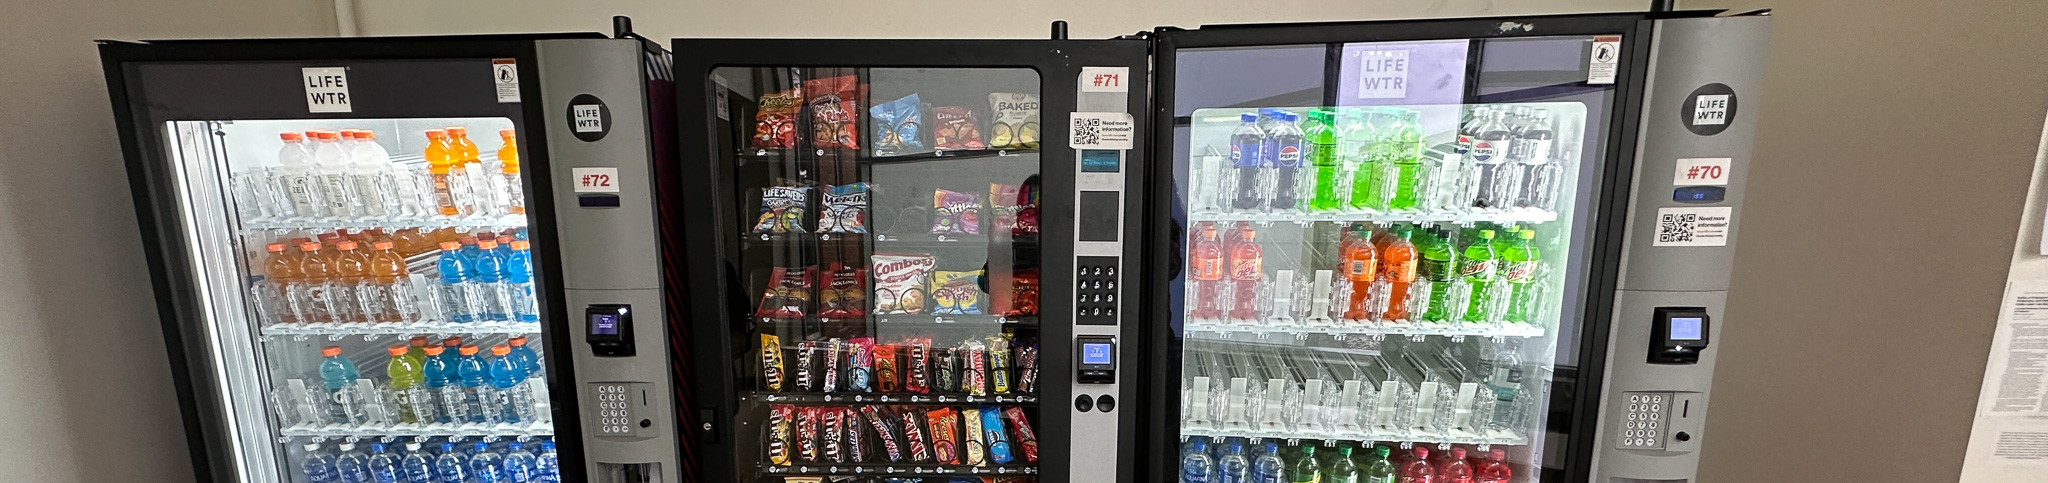 row of vending machines